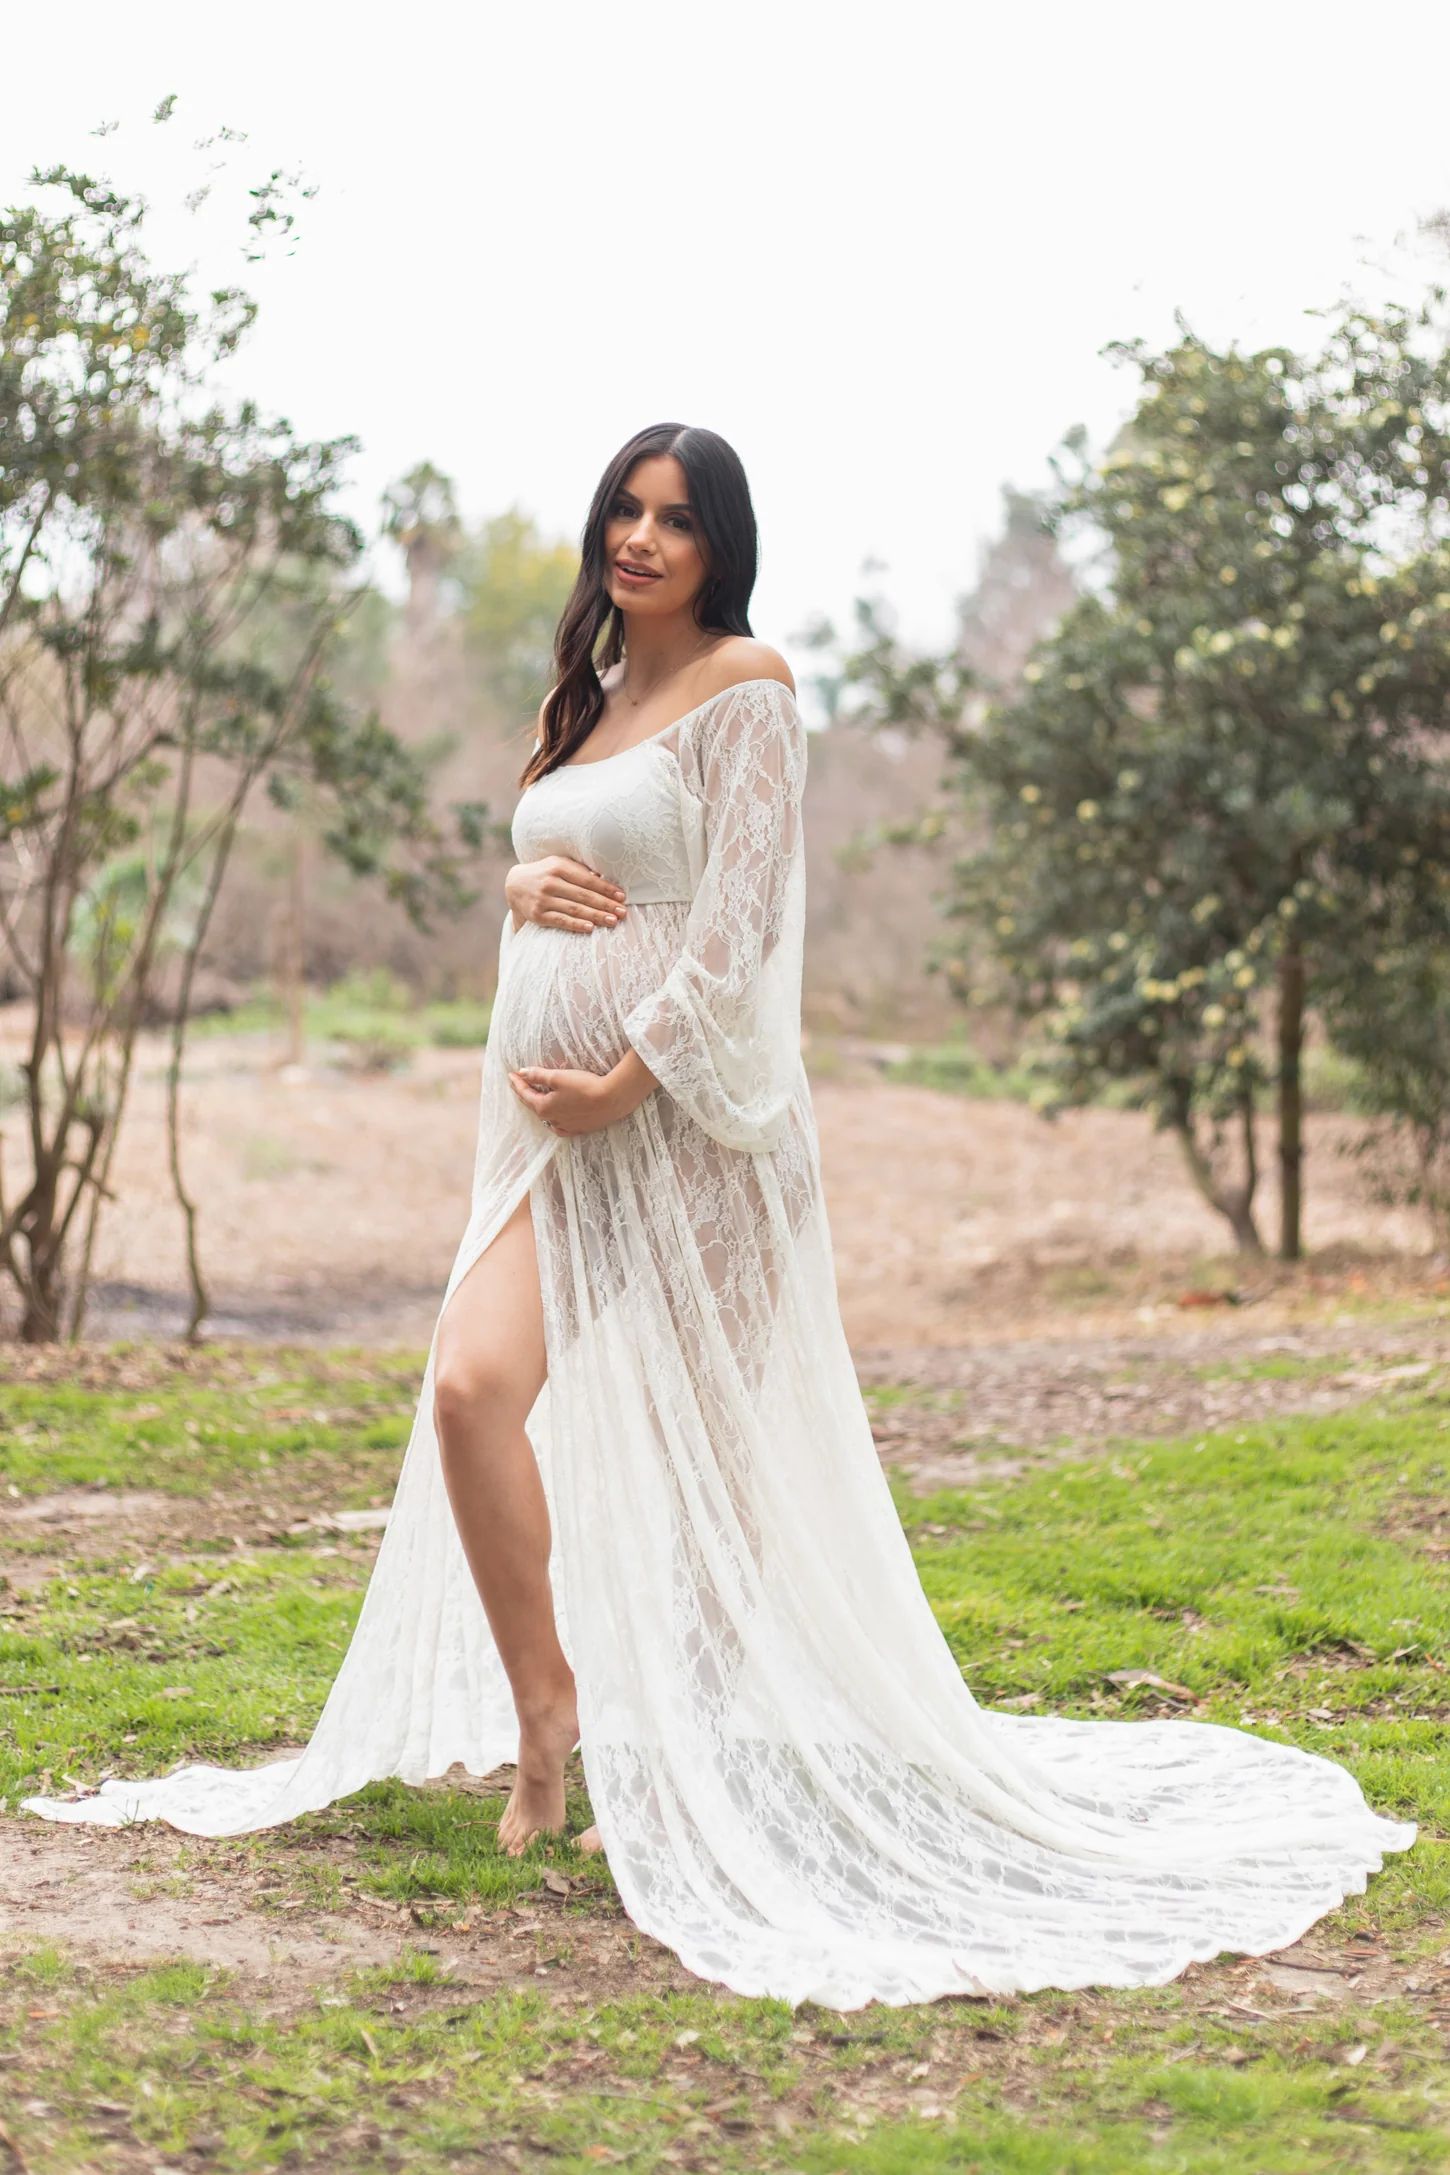 PinkBlush White Lace Off Shoulder Maternity Photoshoot Gown/Dress | PinkBlush Maternity